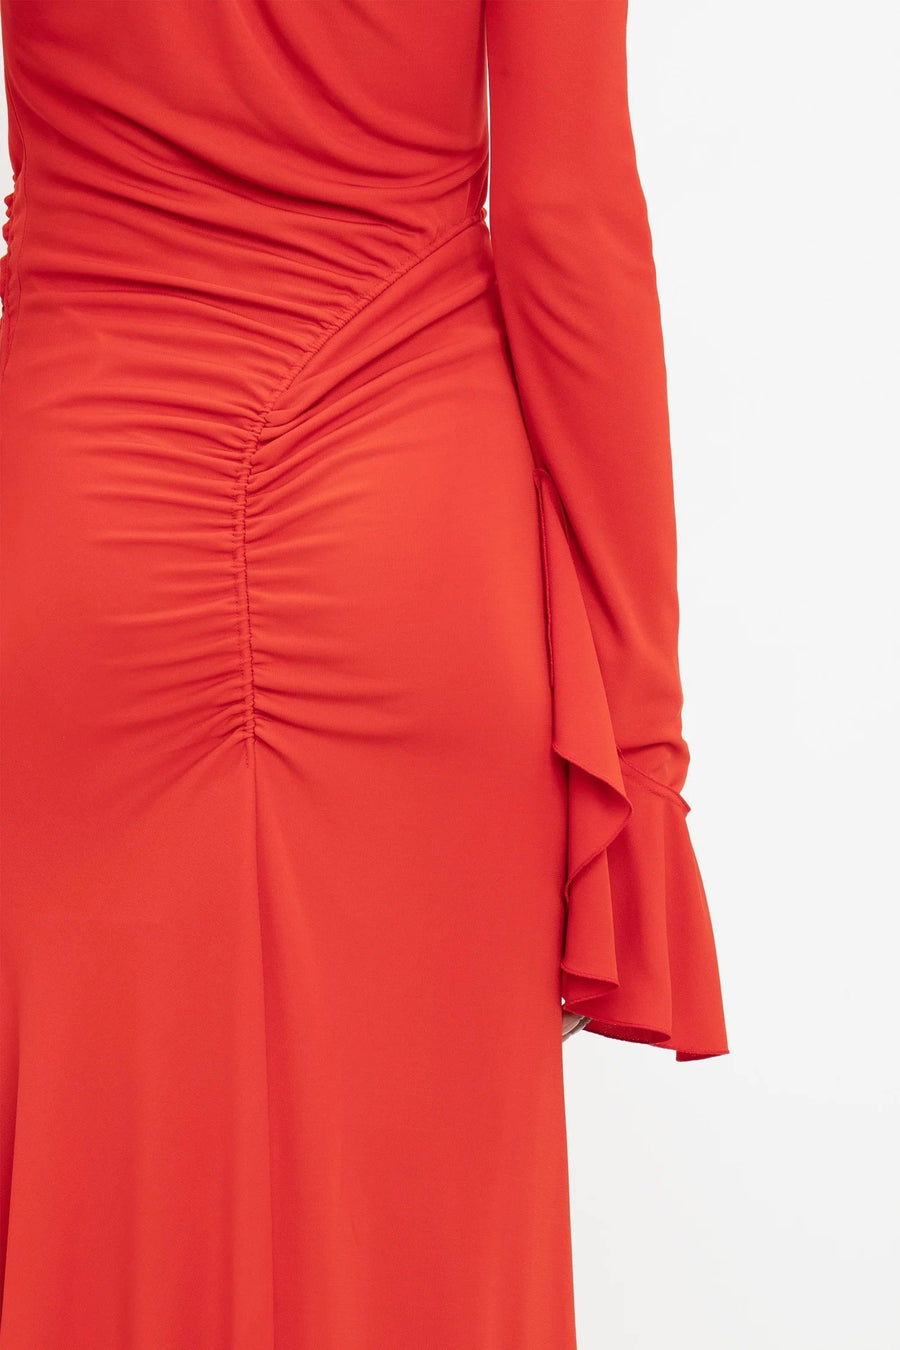 victoria beckham Asymmetric Slash Jersey Dress red figure back detail